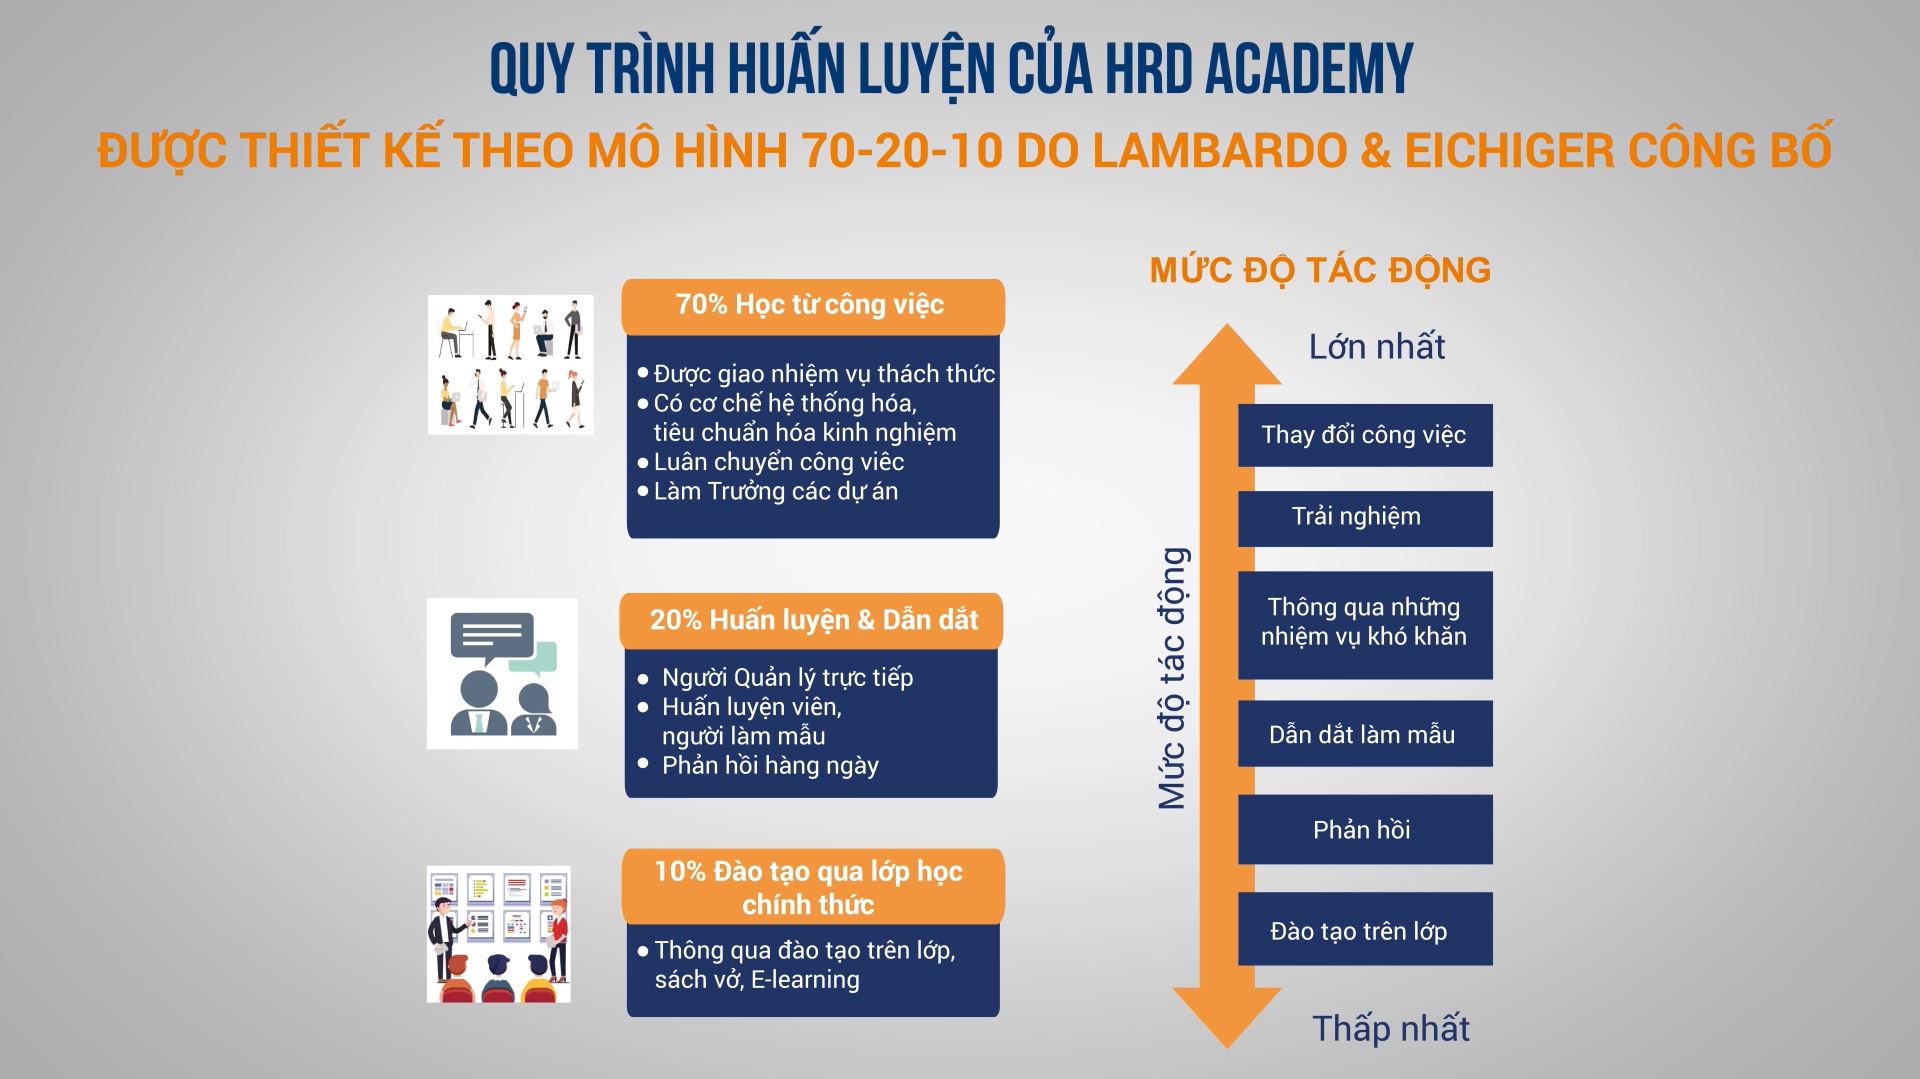 Giới thiệu Học viện Quản trị HRD Academy